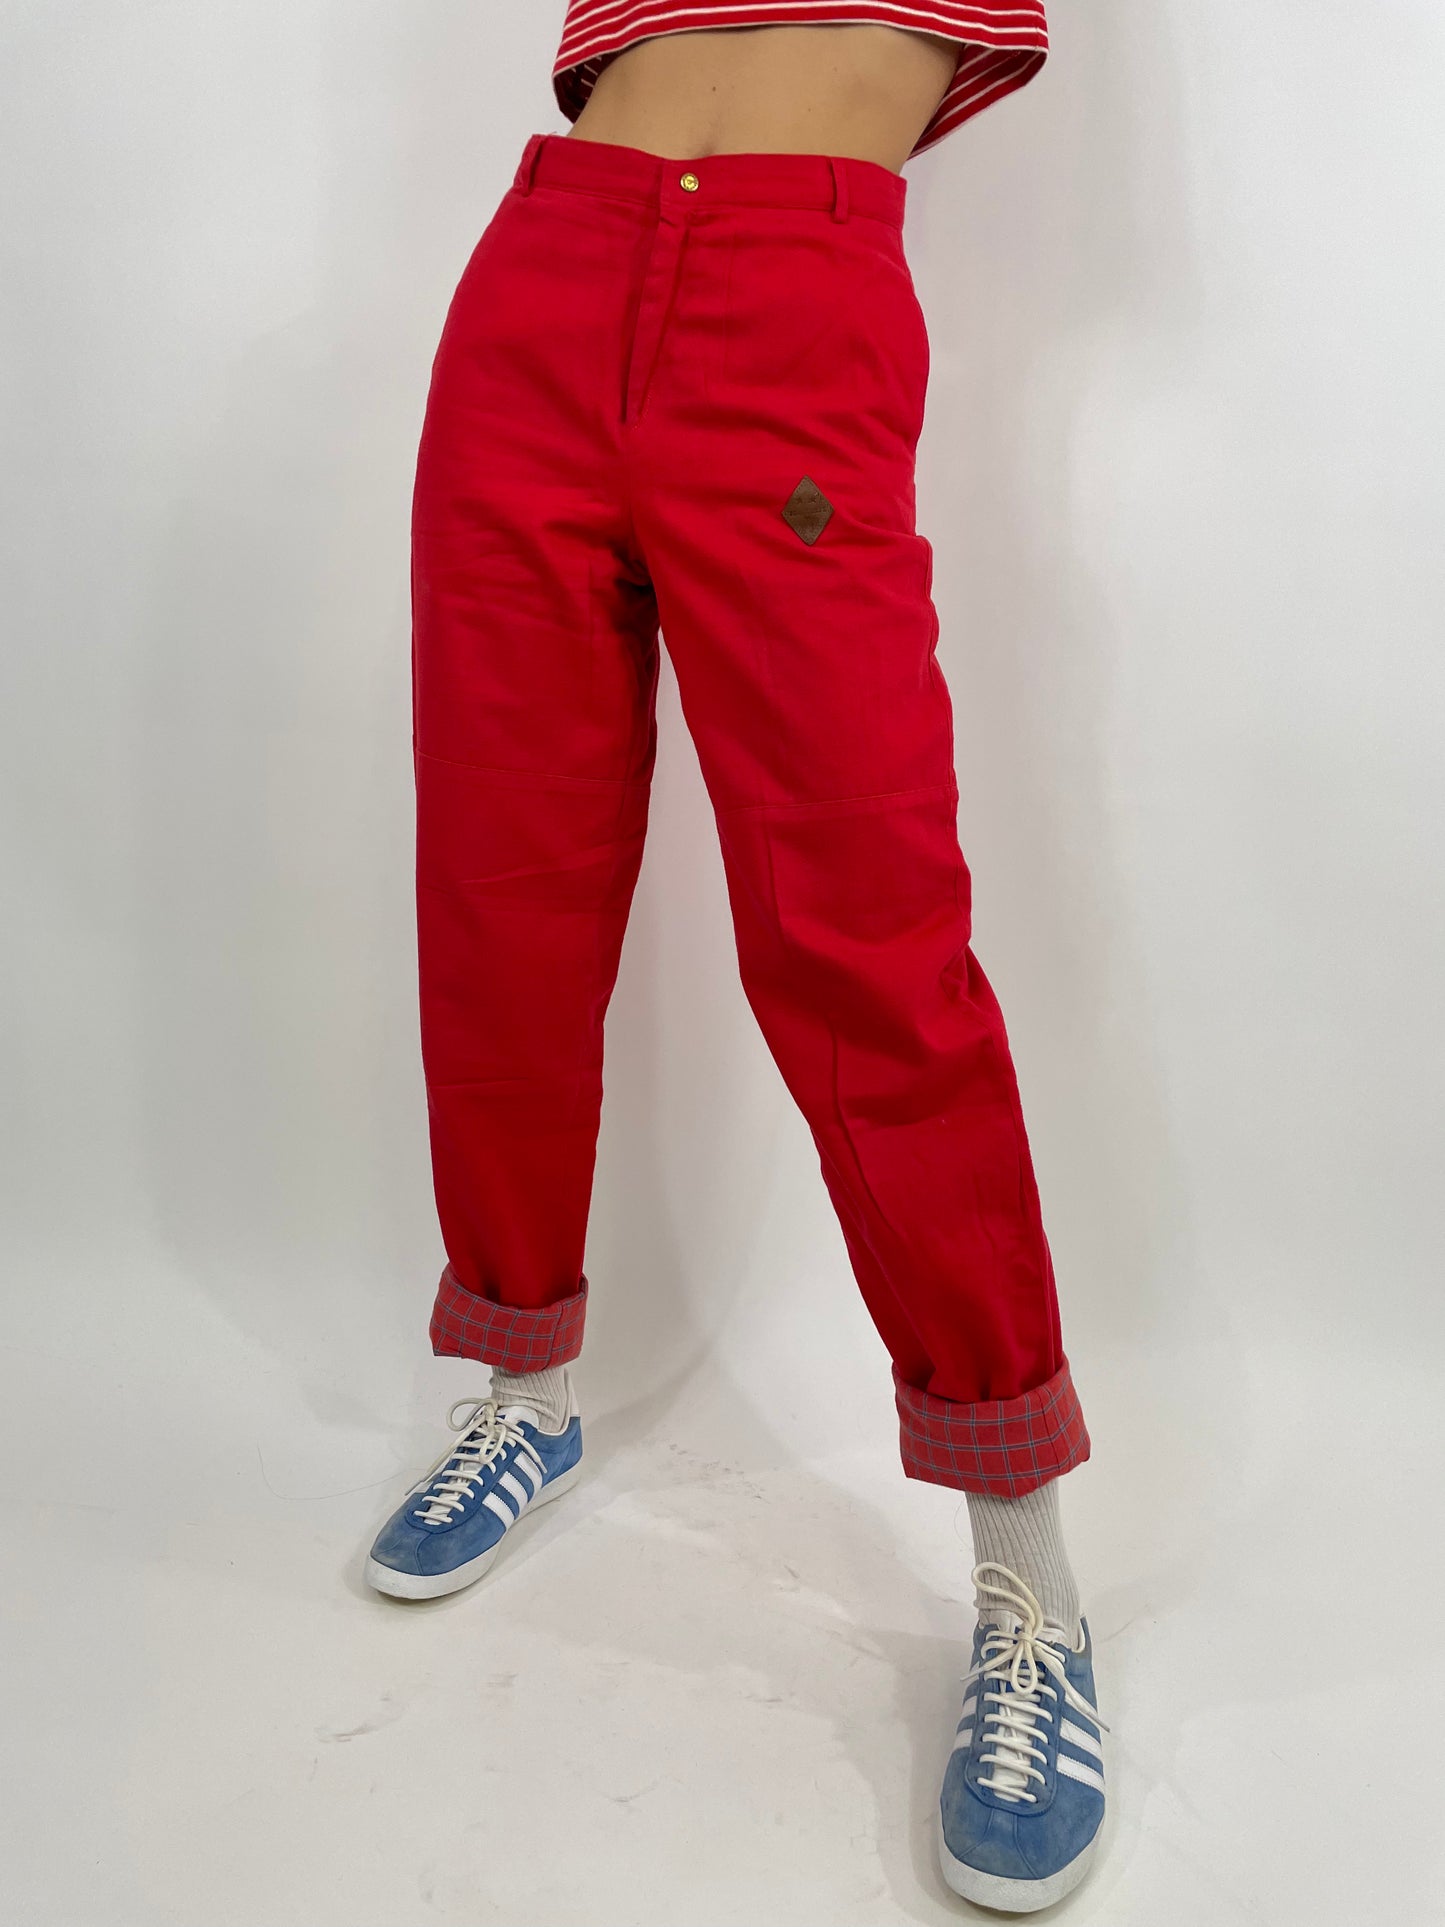 Pantalone Portobello's 1990s